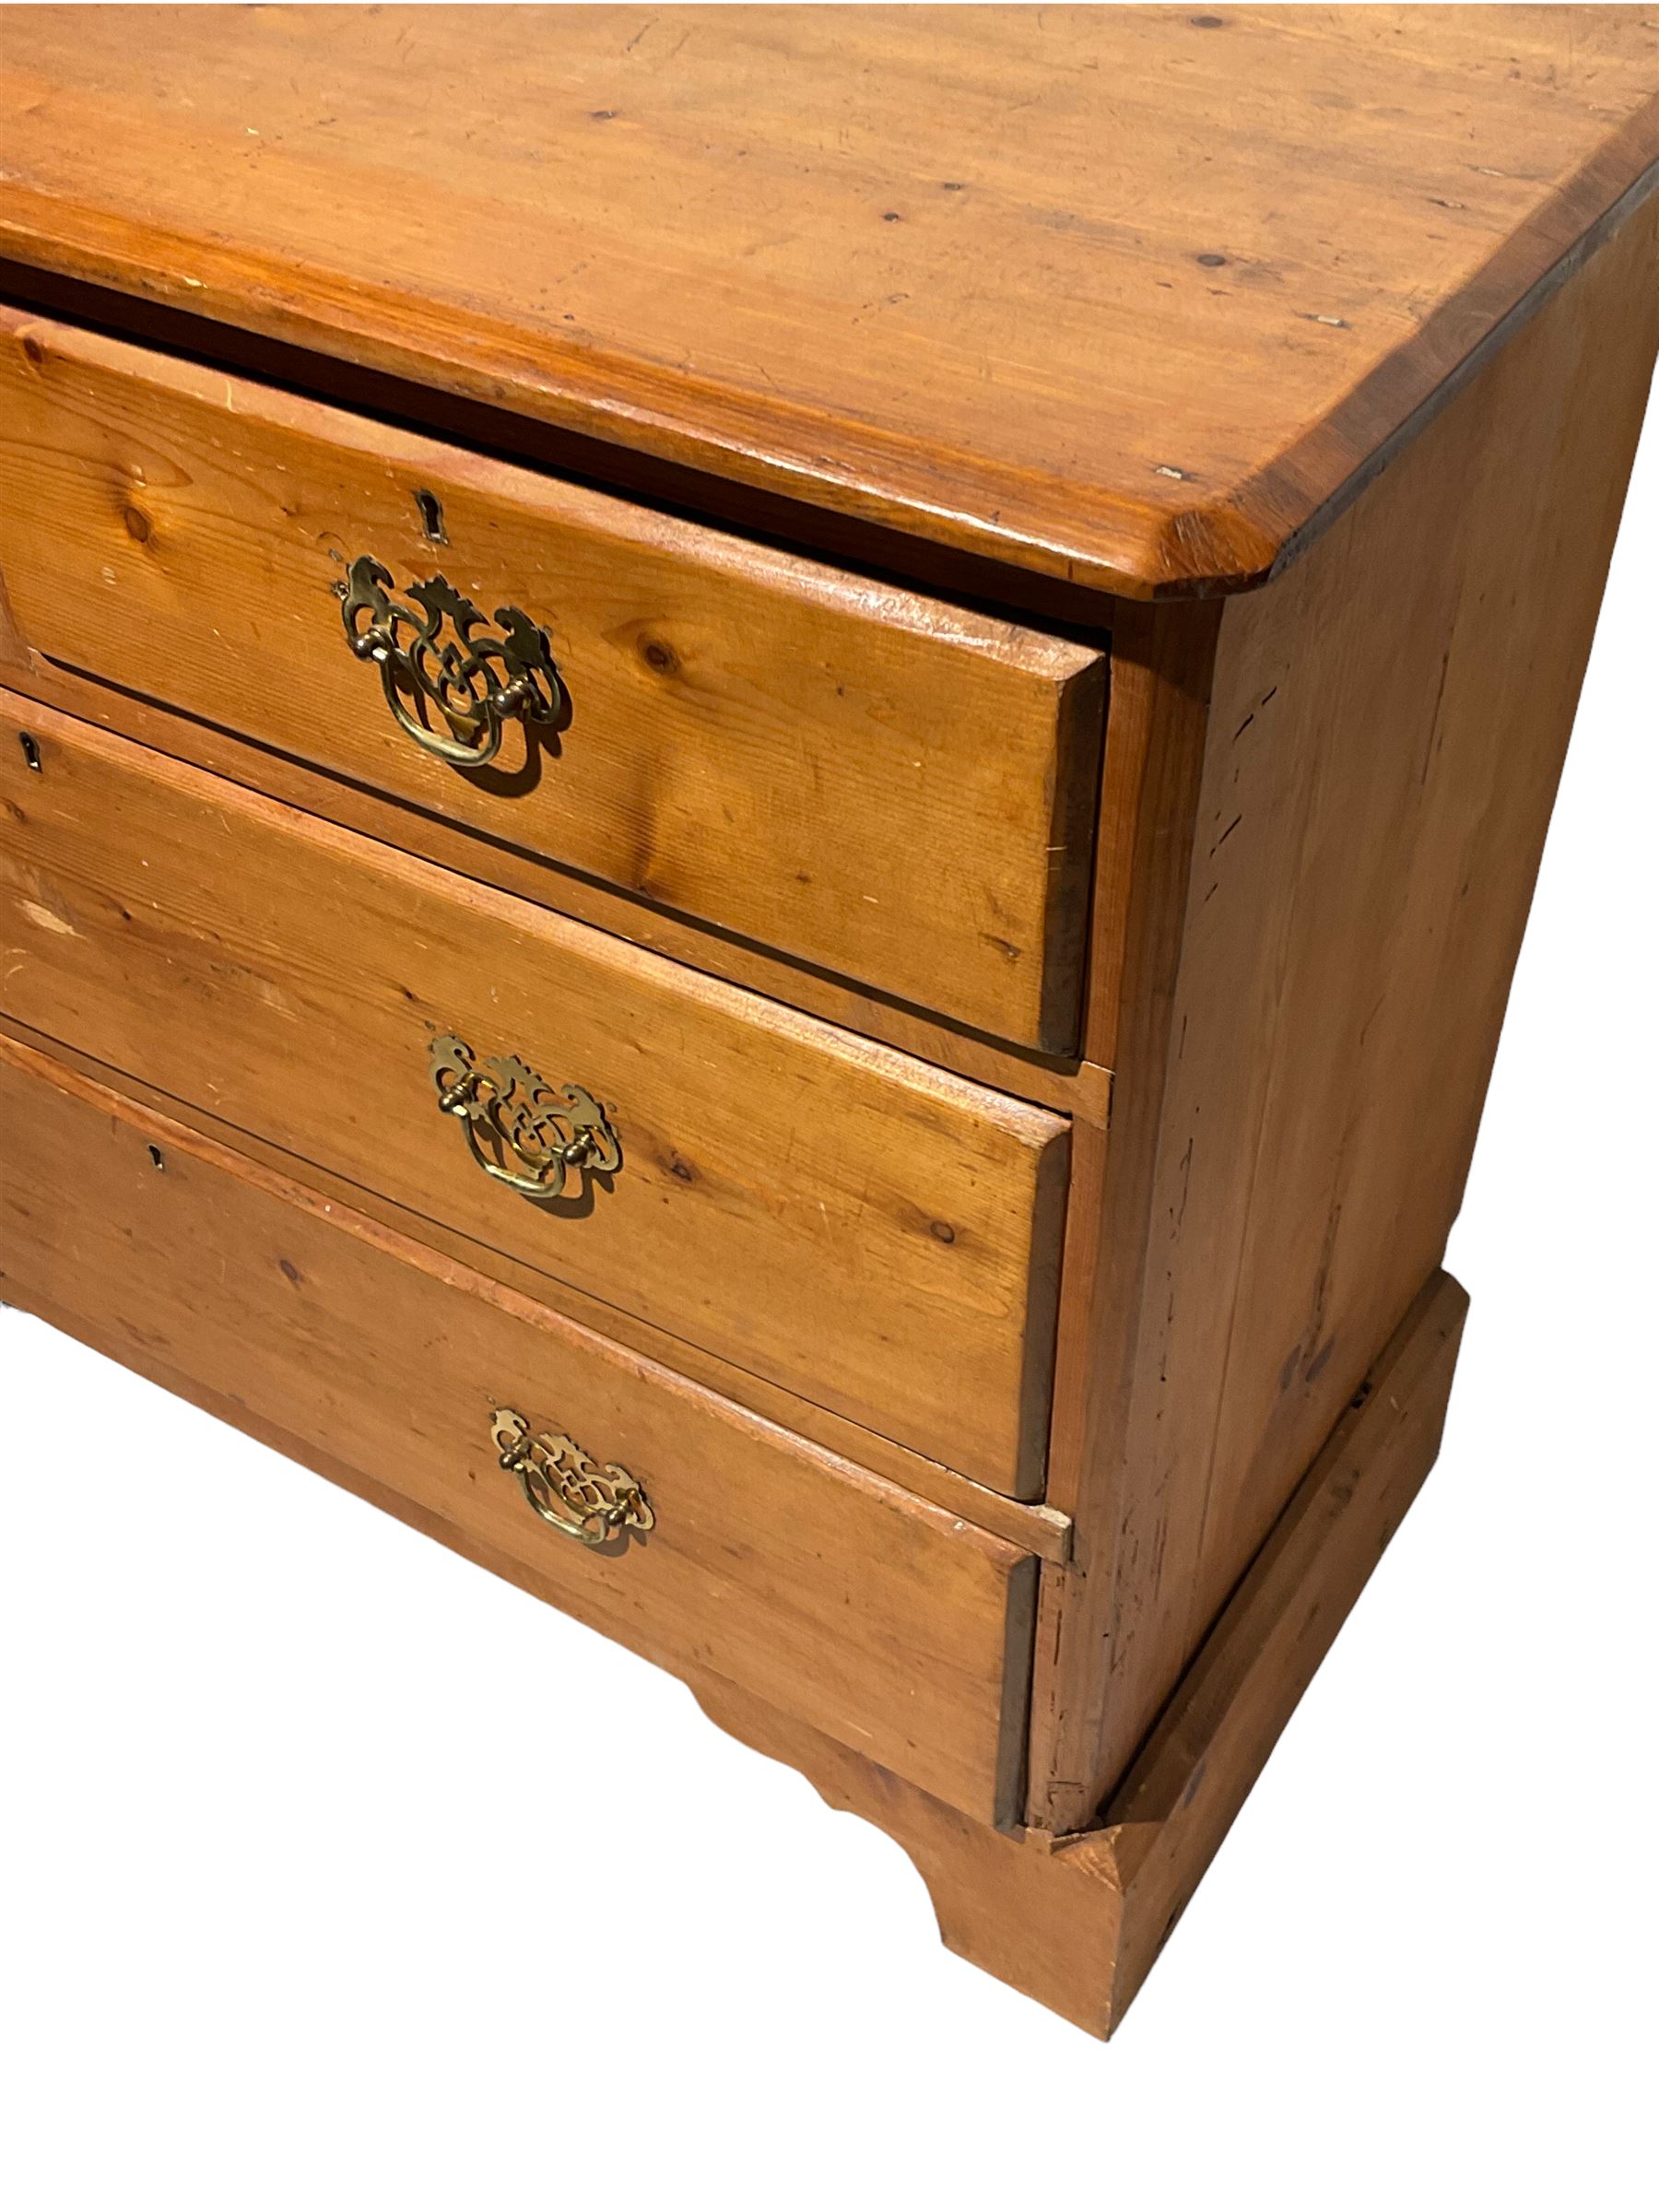 19th century pine chest - Image 3 of 4